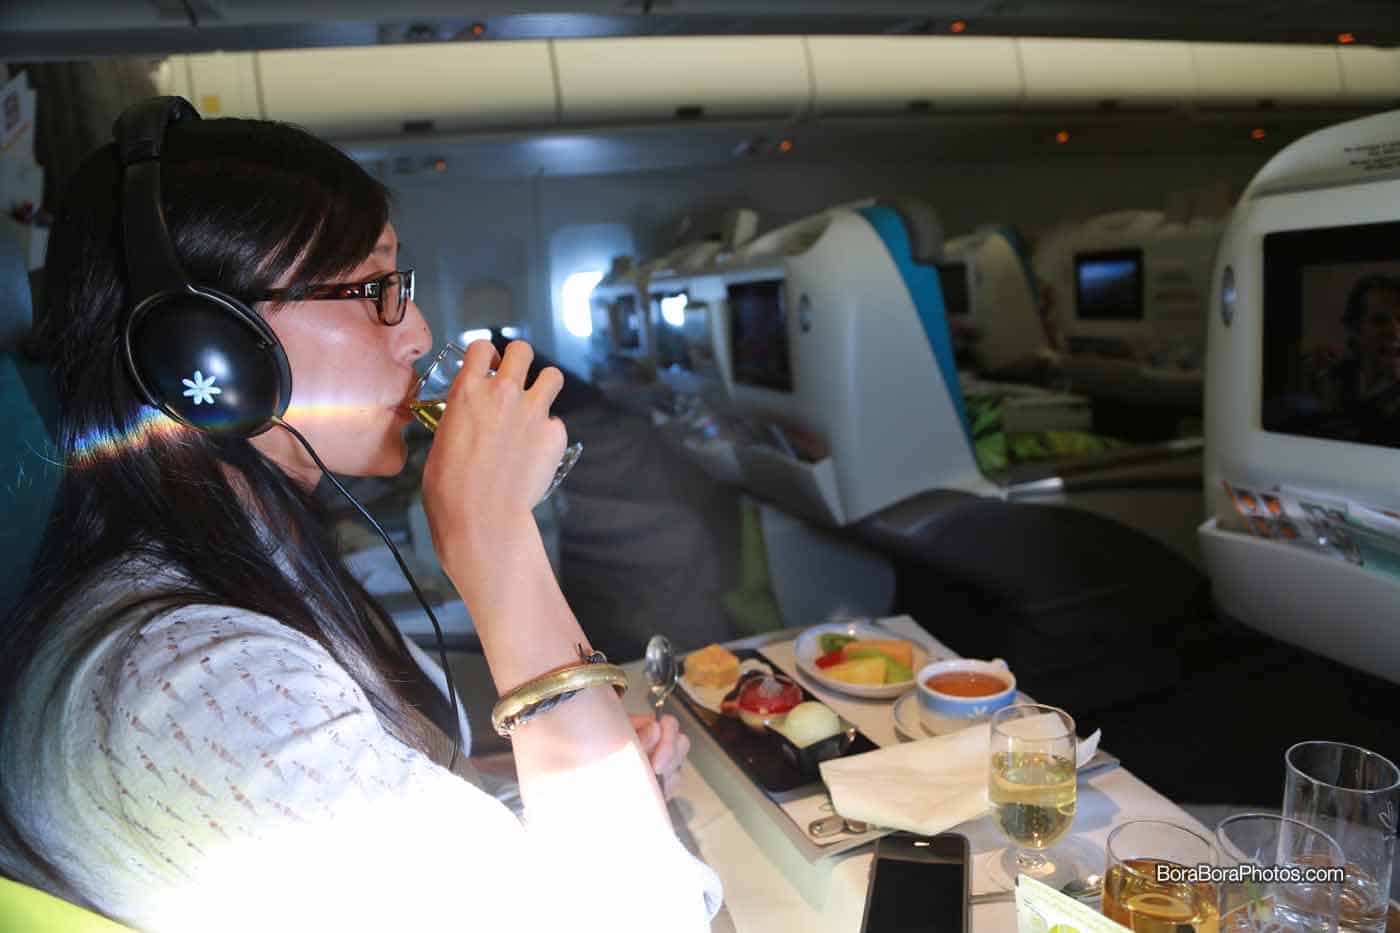 Jessica wearing Air Tahiti Nui provided headphones to watch a movie.